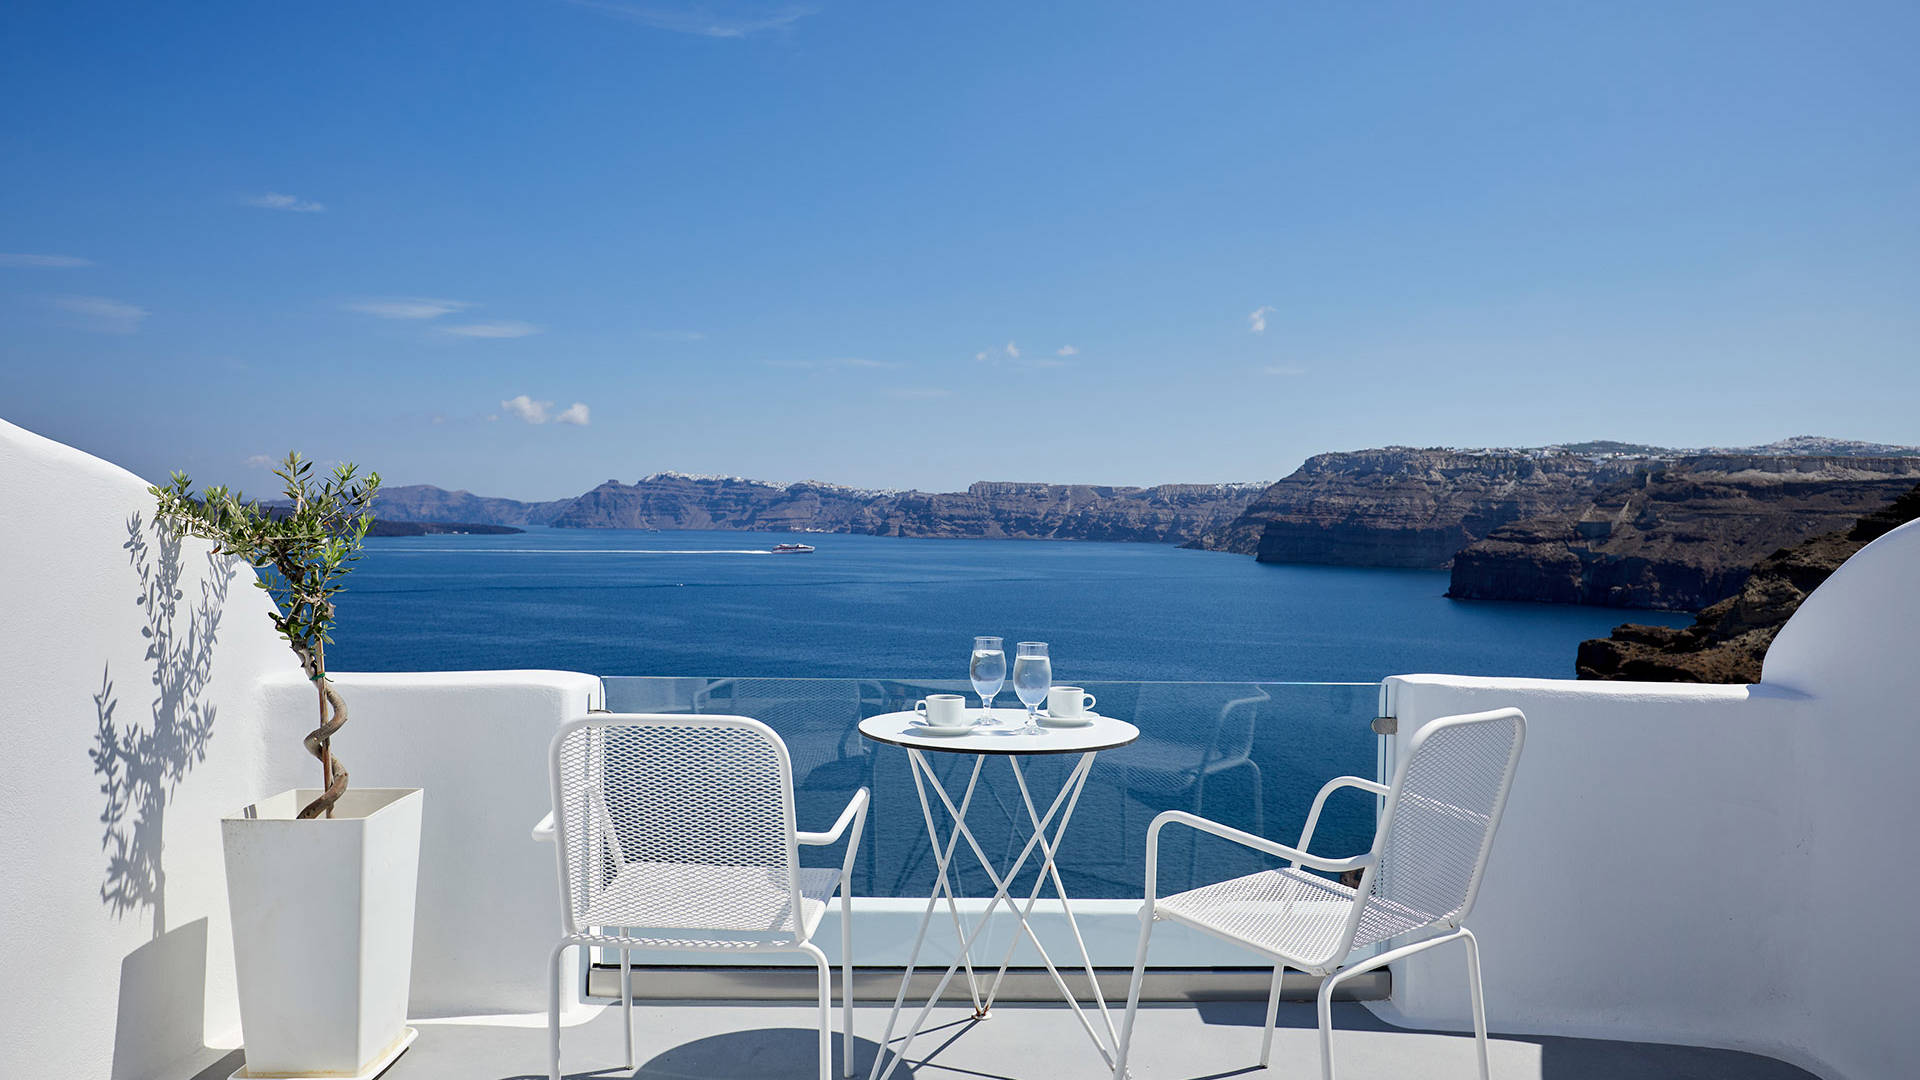 
Santorini View Hotel μπαλκόνι σε λευκά χρώματα με έπιπλα και θέα στο Αιγαίο και την Καλντέρα